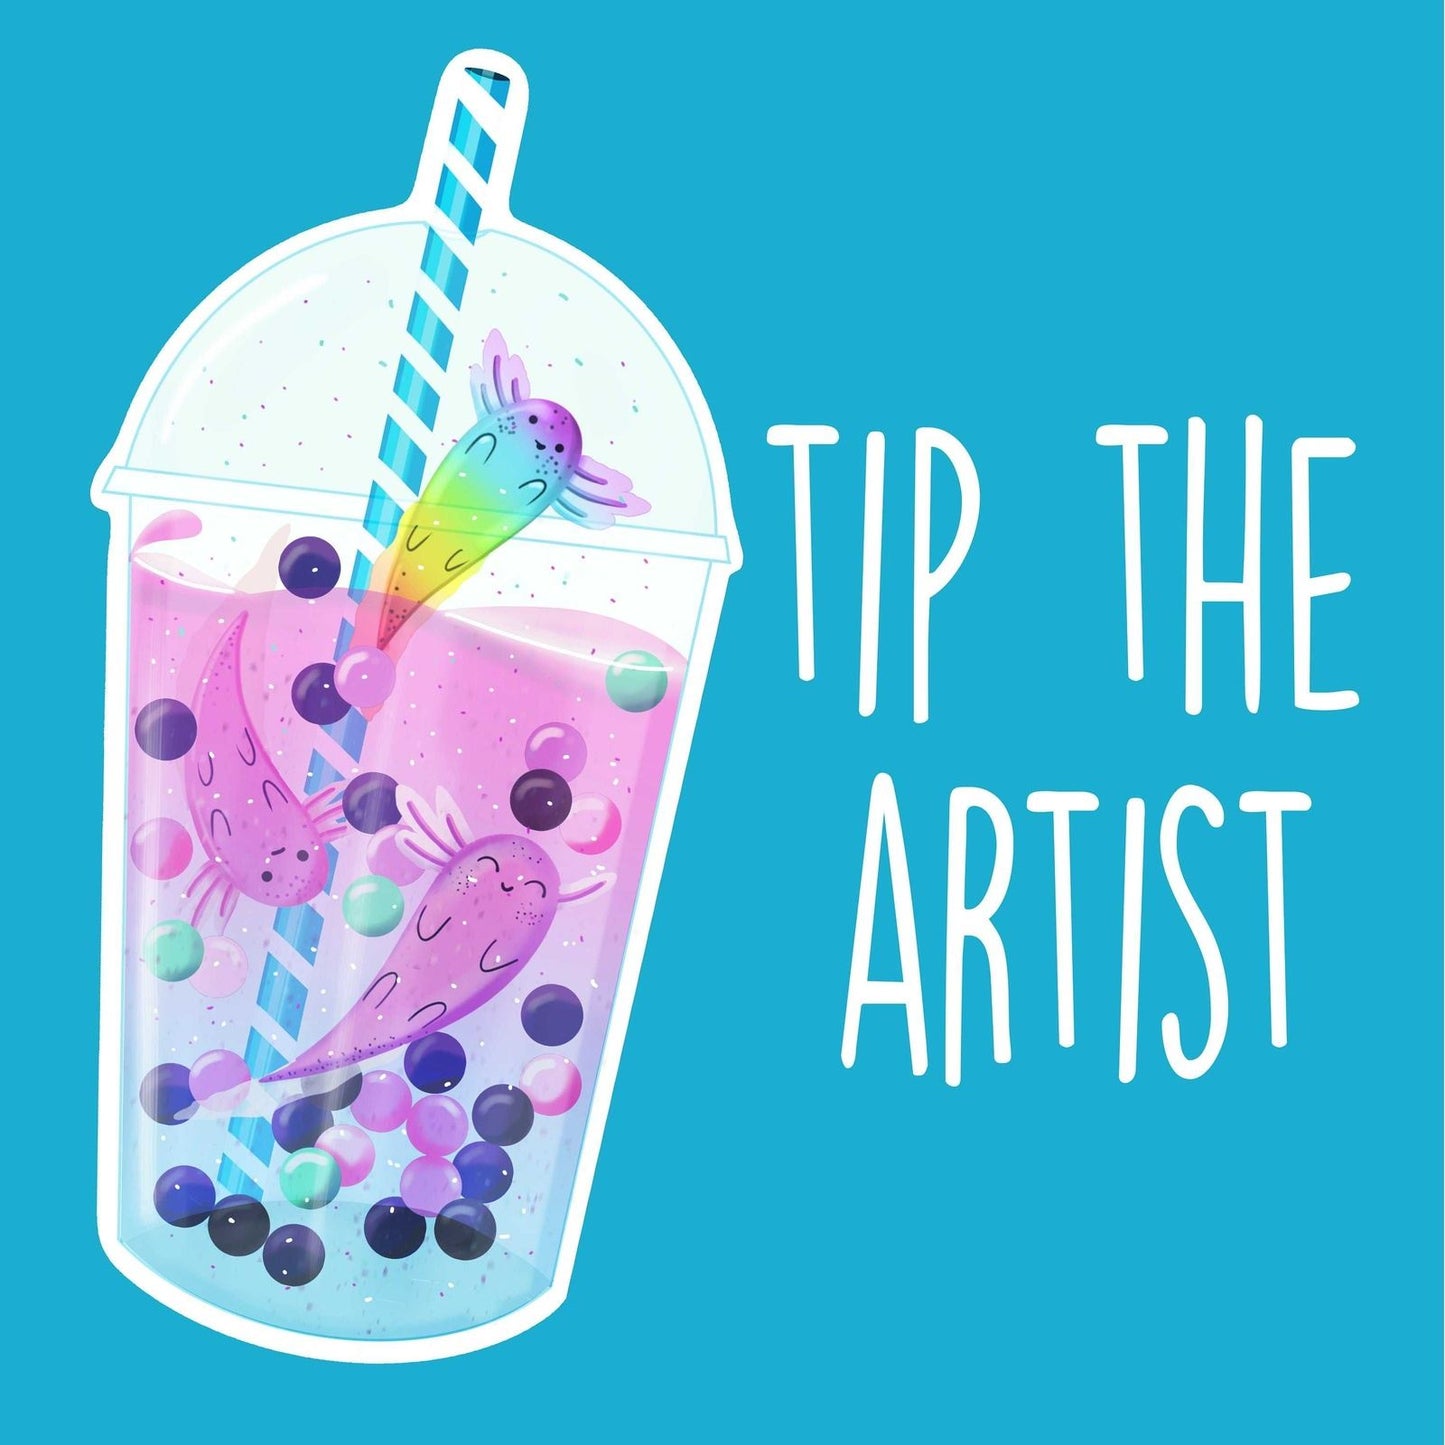 Tip the artist, virtual tip jar